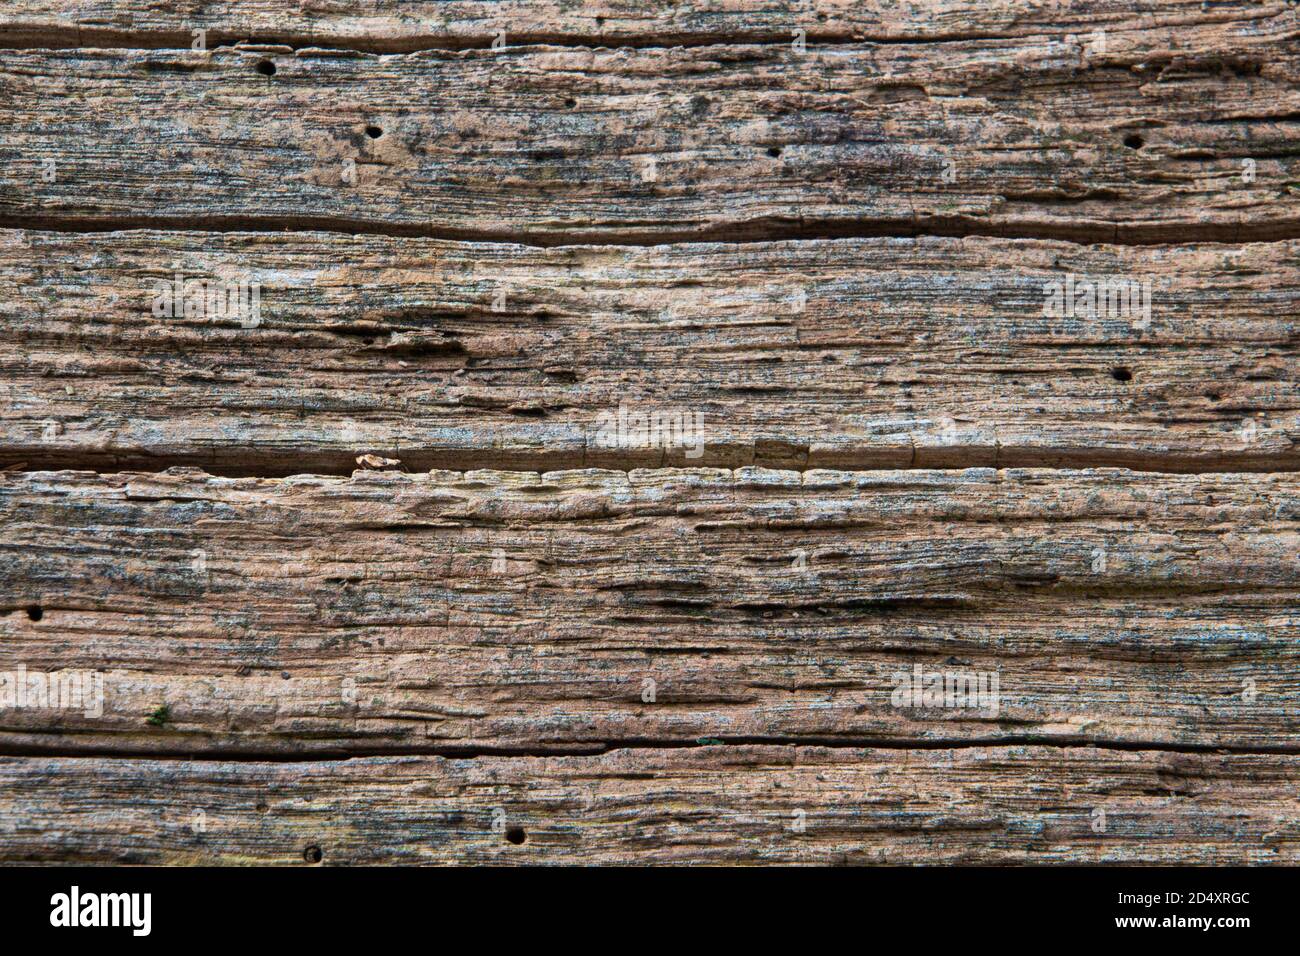 Horizontal vintage wood texture for background Stock Photo